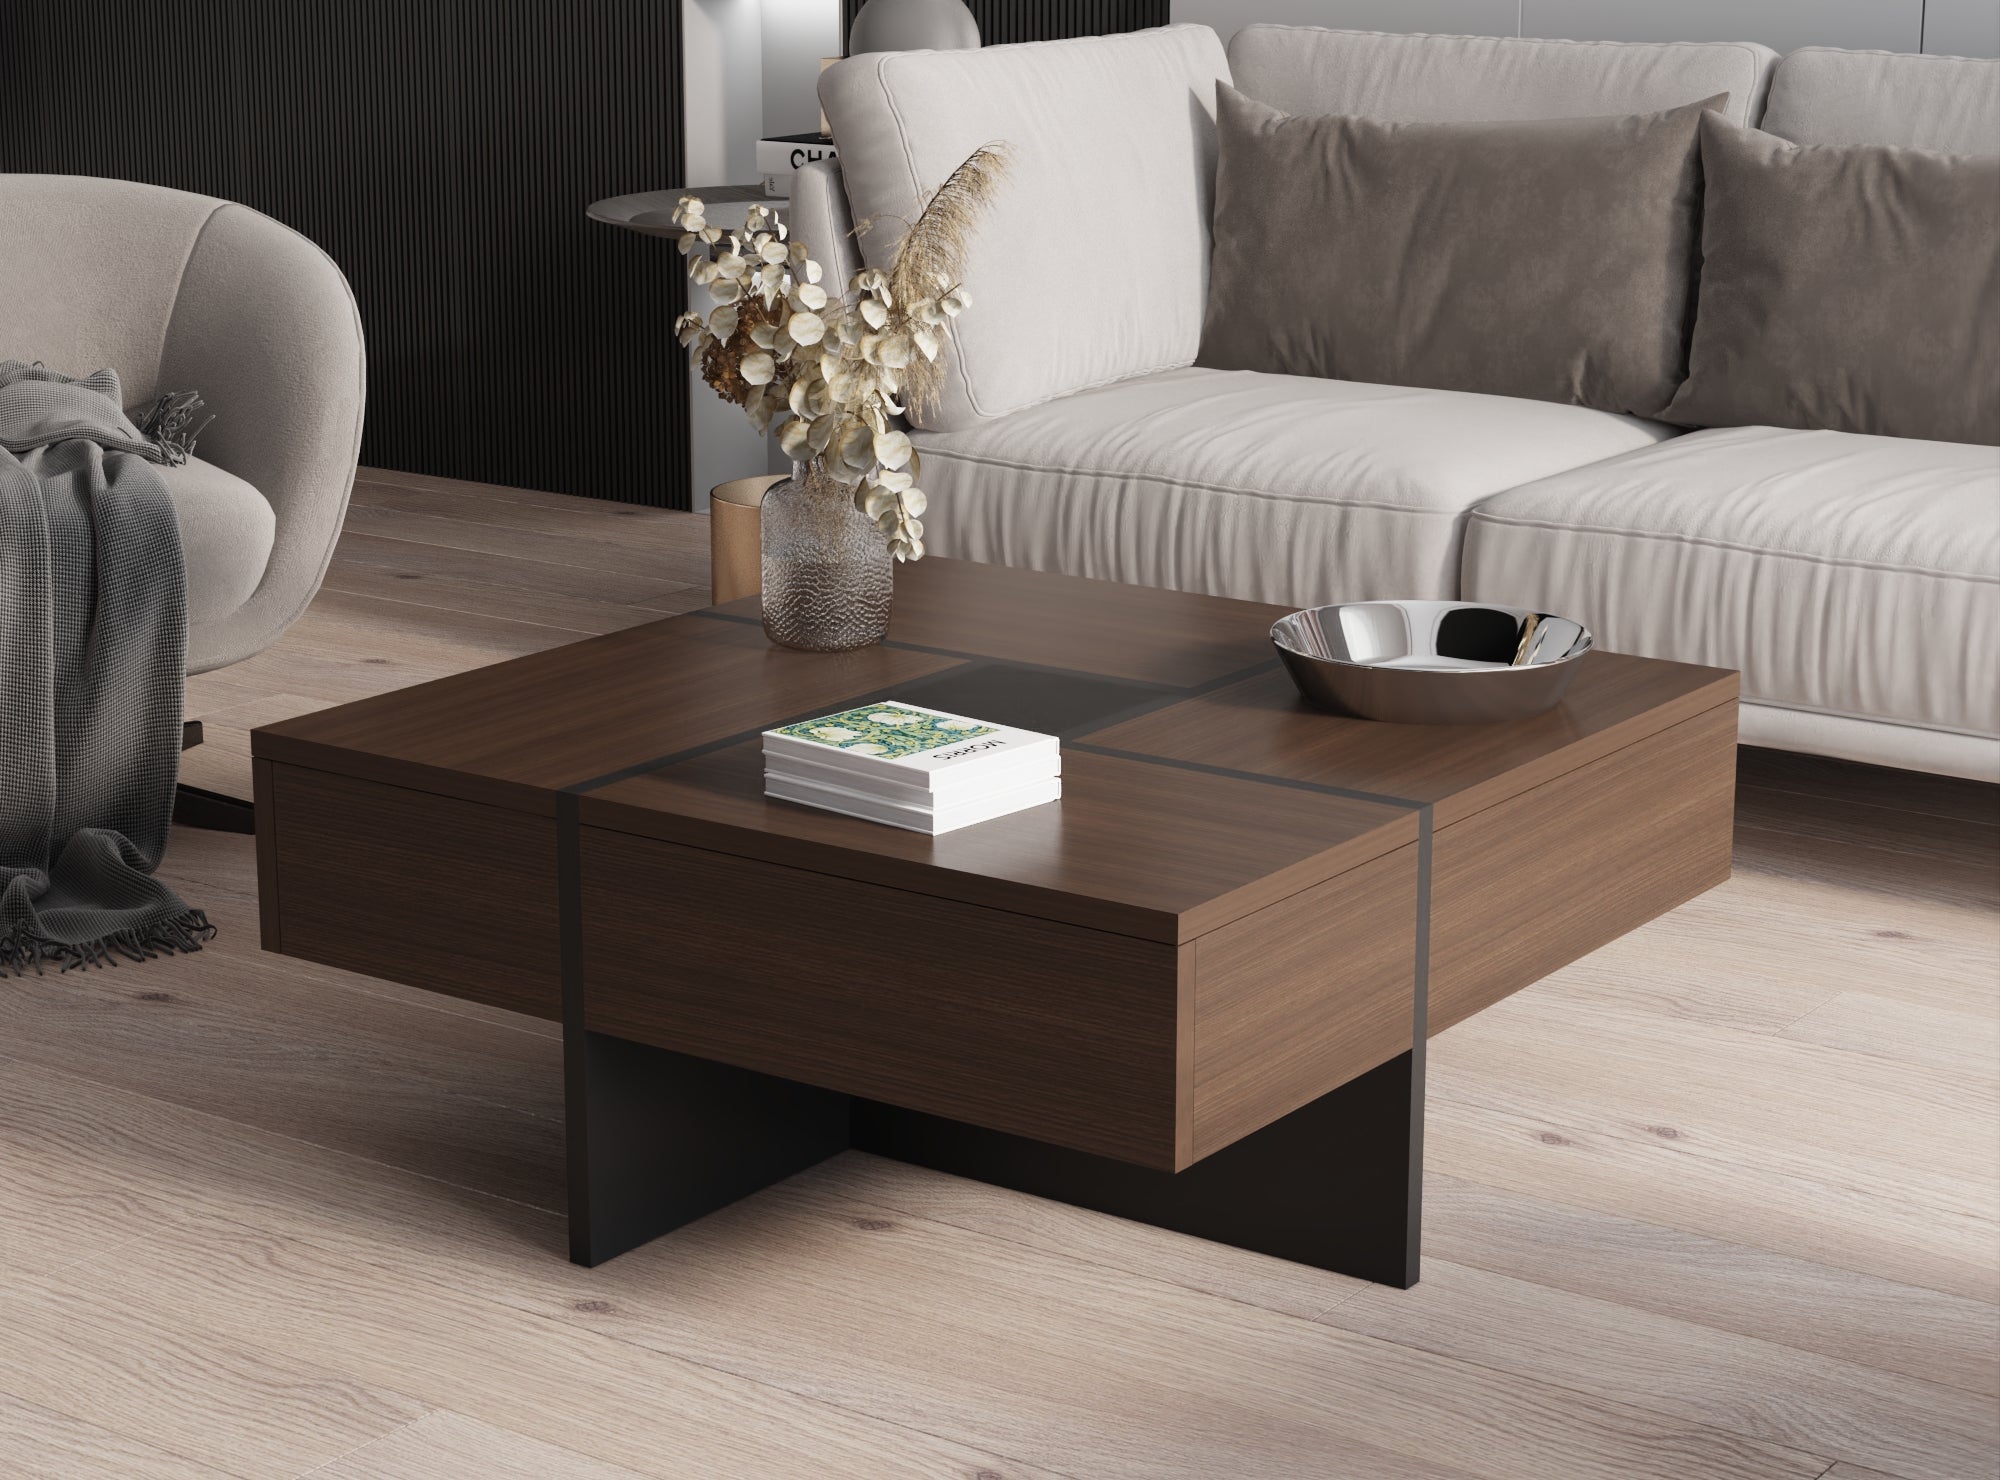 Futuristic Dark Walnut Extendable Coffee Table with Storage